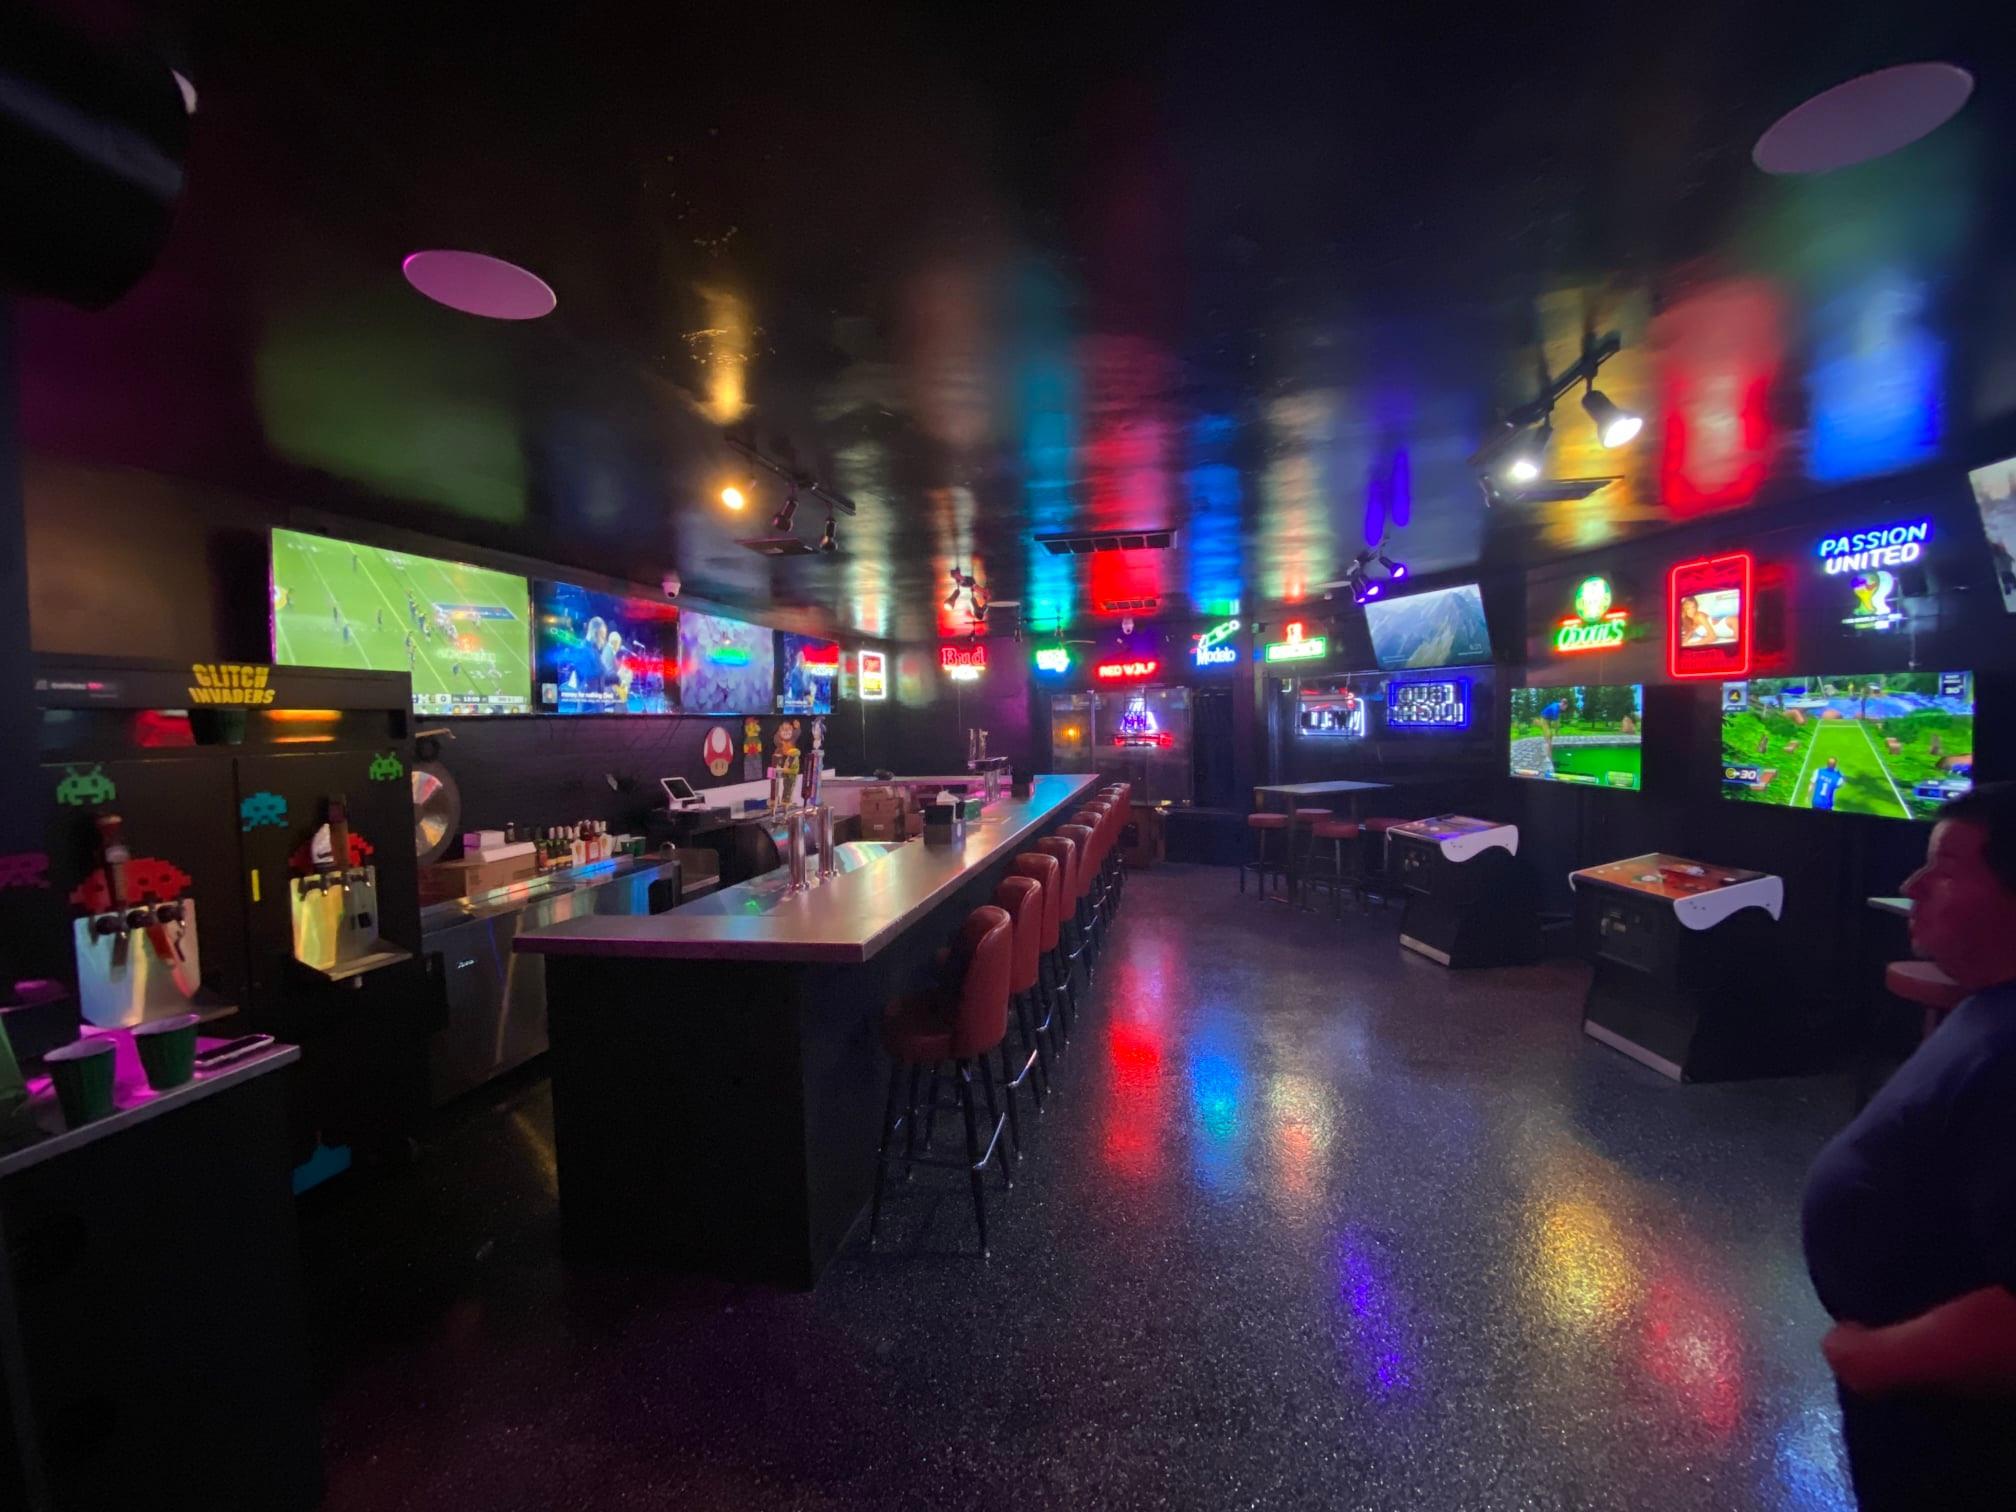 Havasu business: The Glitch arcade bar opening in downtown Havasu